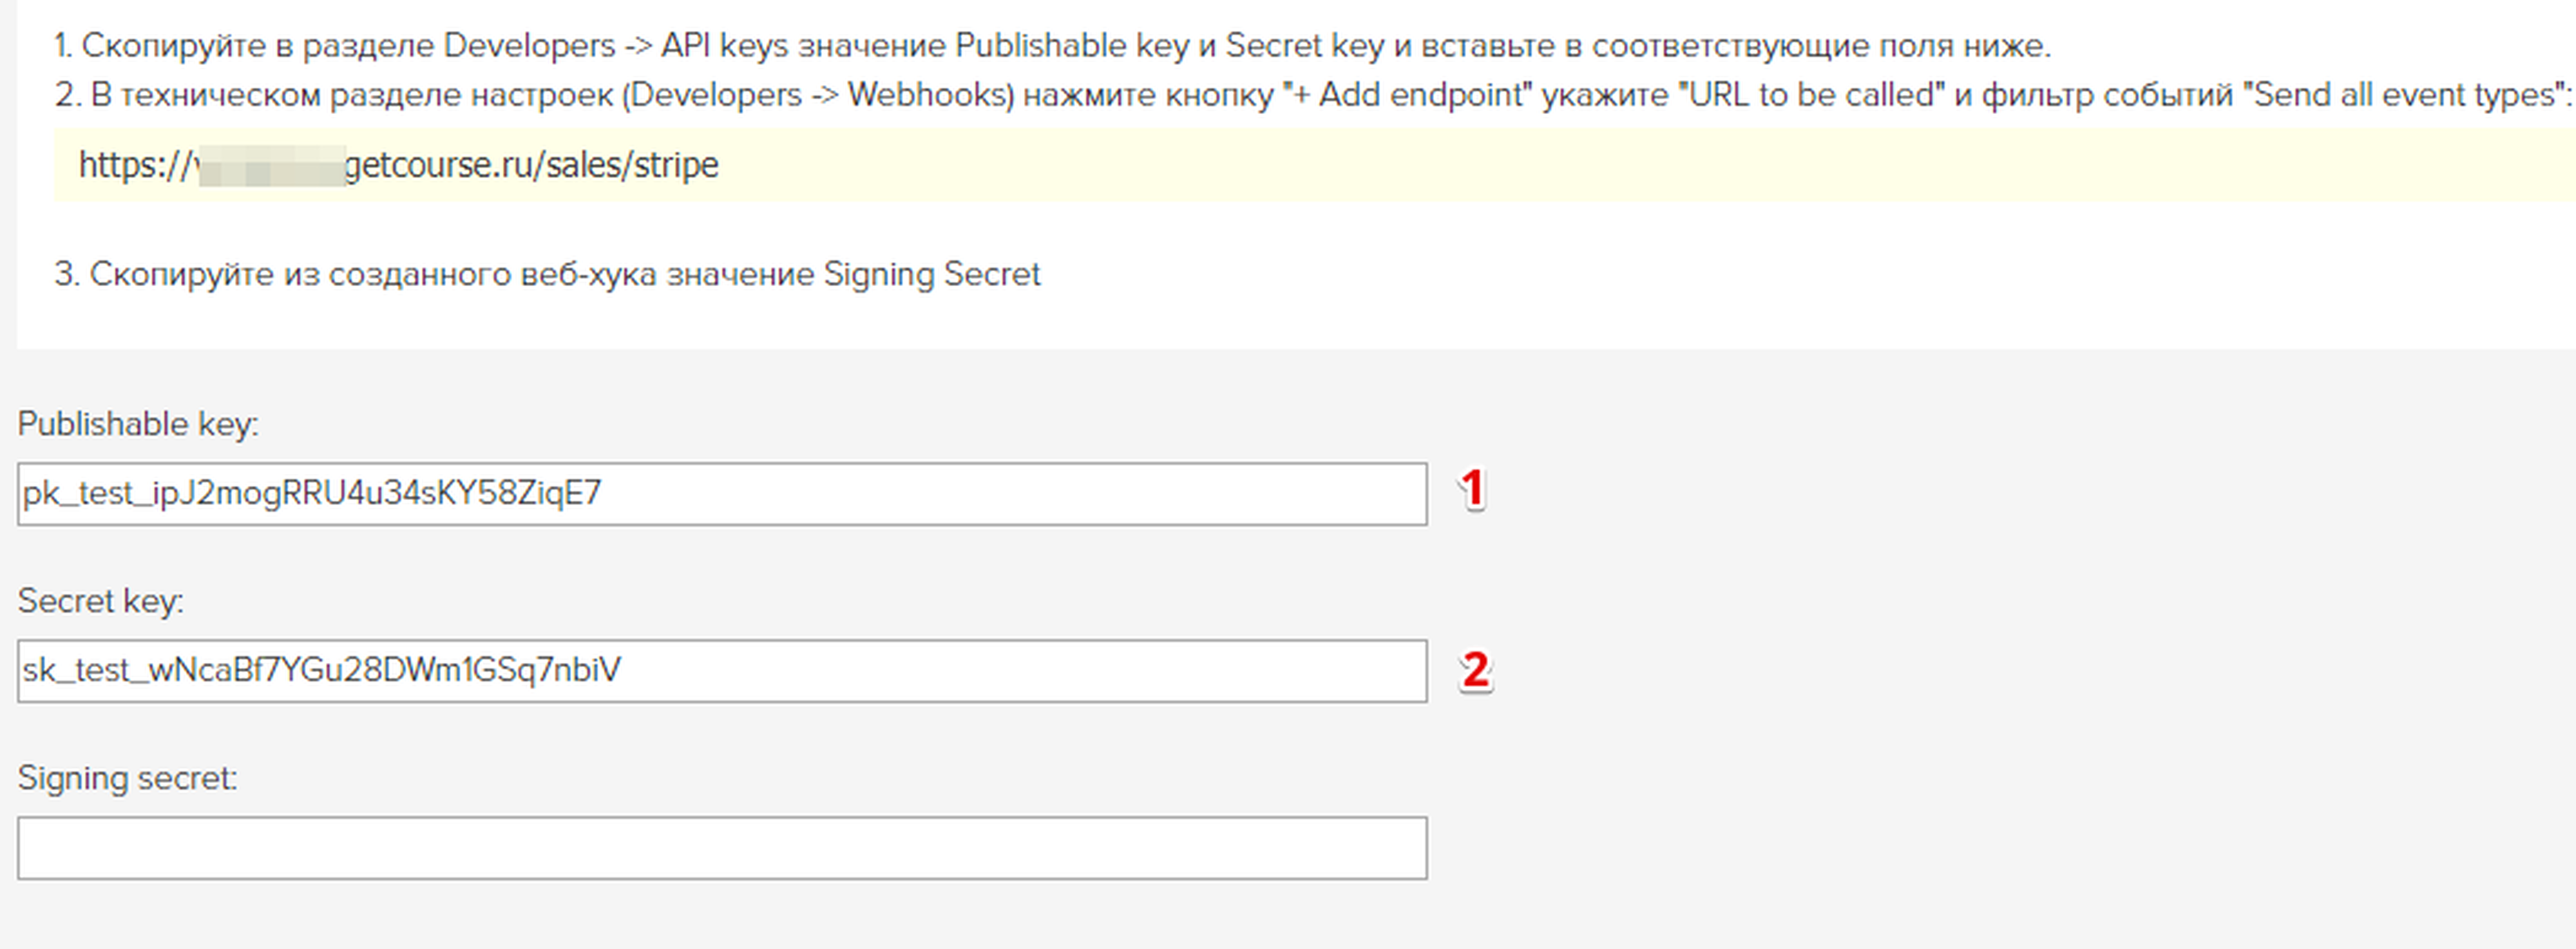 Поля Publishable key и Secret key в аккаунте GetCourse